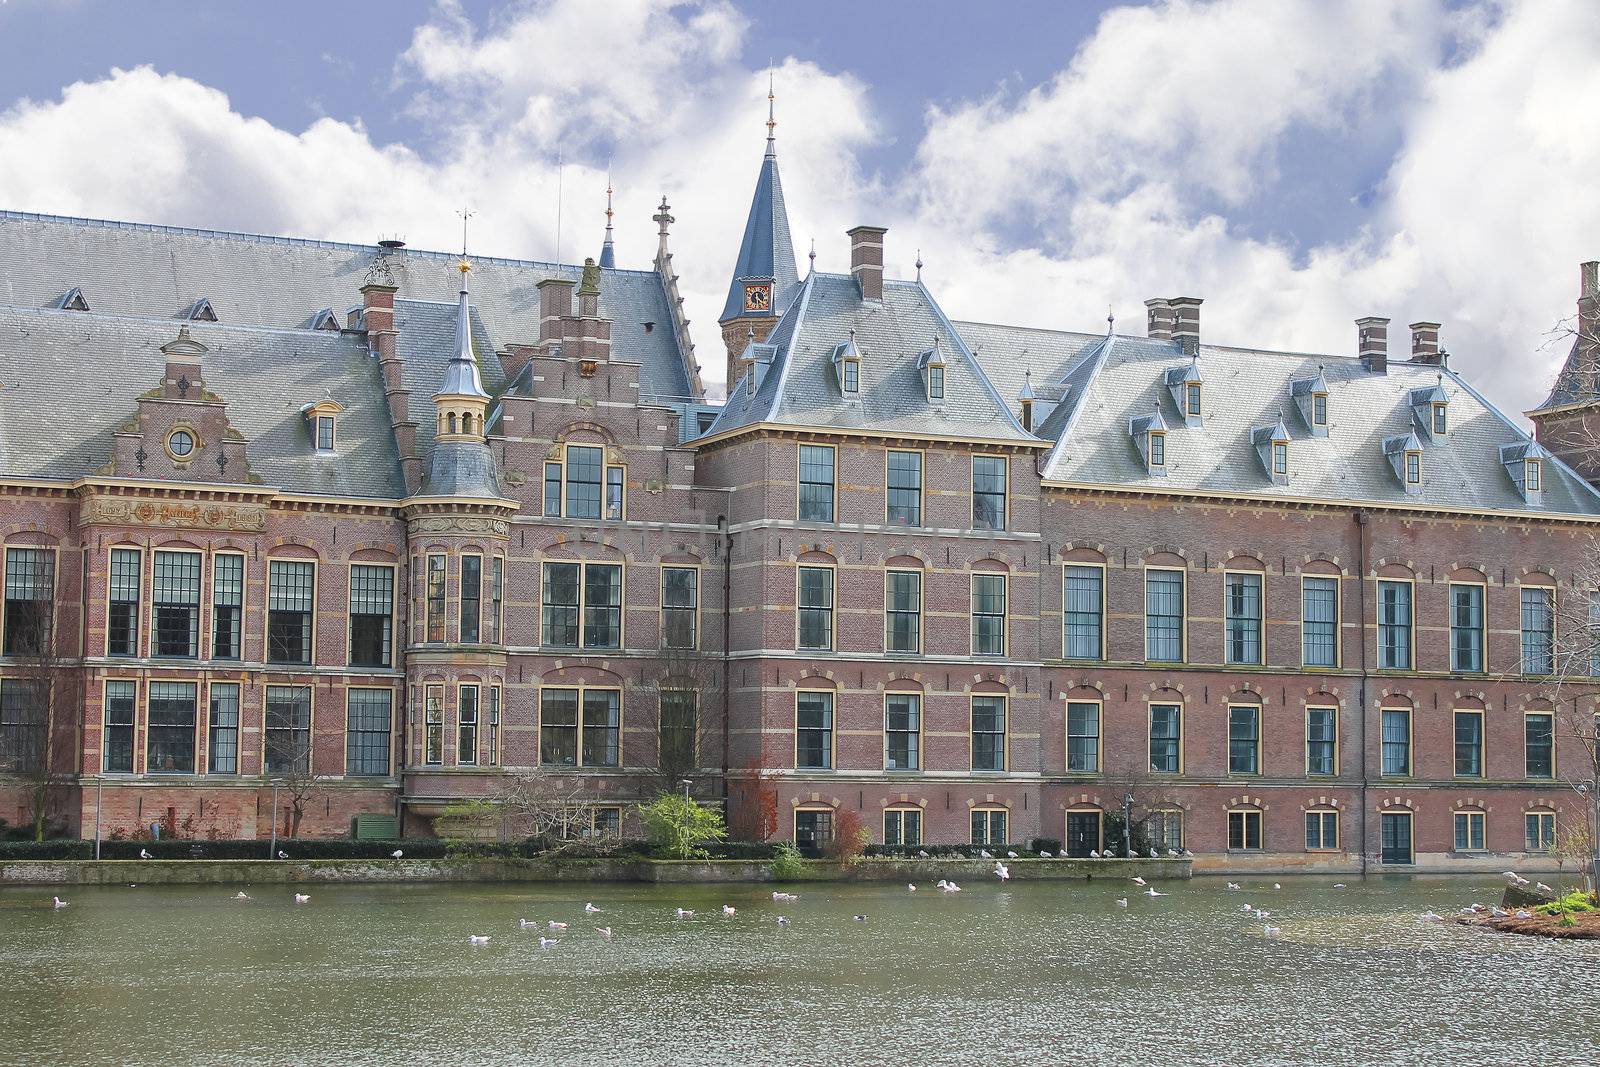 Binnenhof Palace in Den Haag,  Netherlands. Dutch Parlament buildings